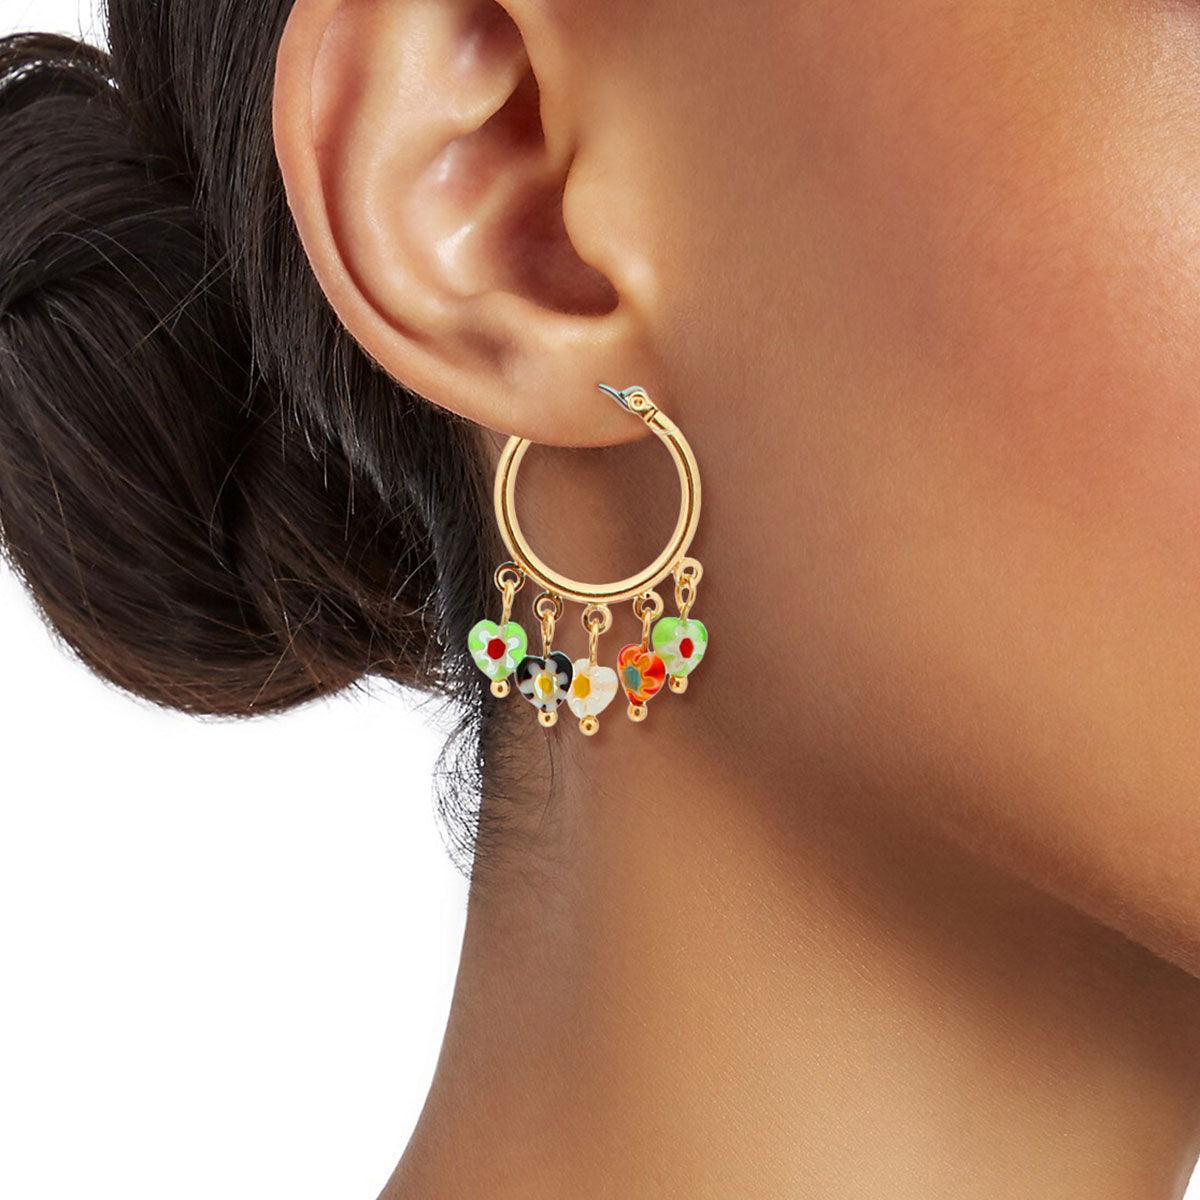 Get Dangle Decorative Element Heart Earrings for Cute Femininity